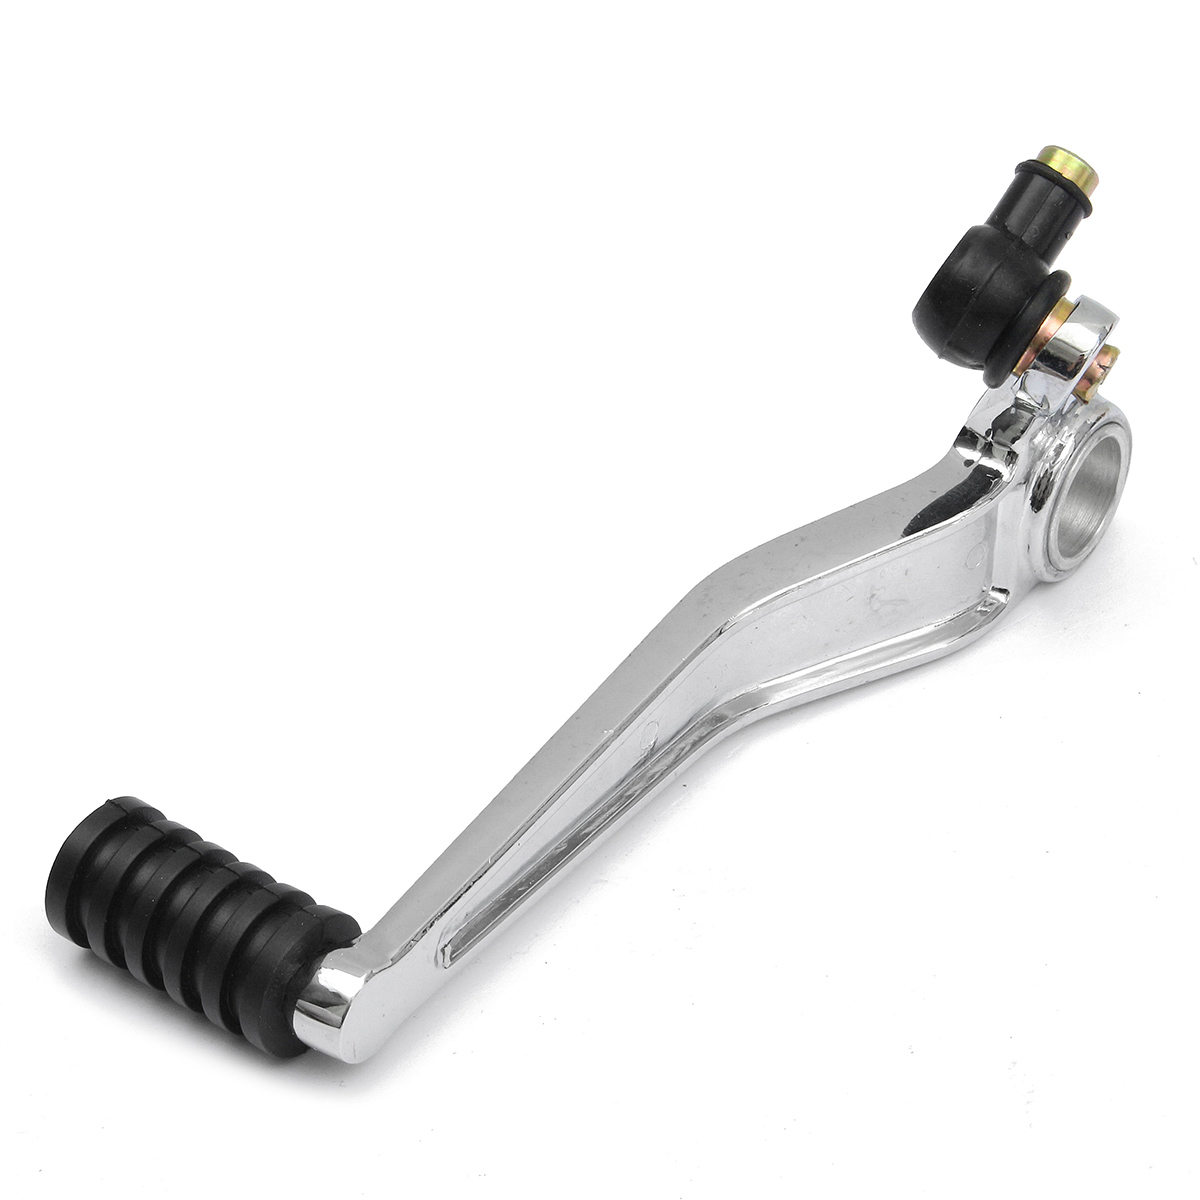 Aluminum Gear Shift Lever Pedal For Suzuki GSXR600 GSXR750 GSXR1000